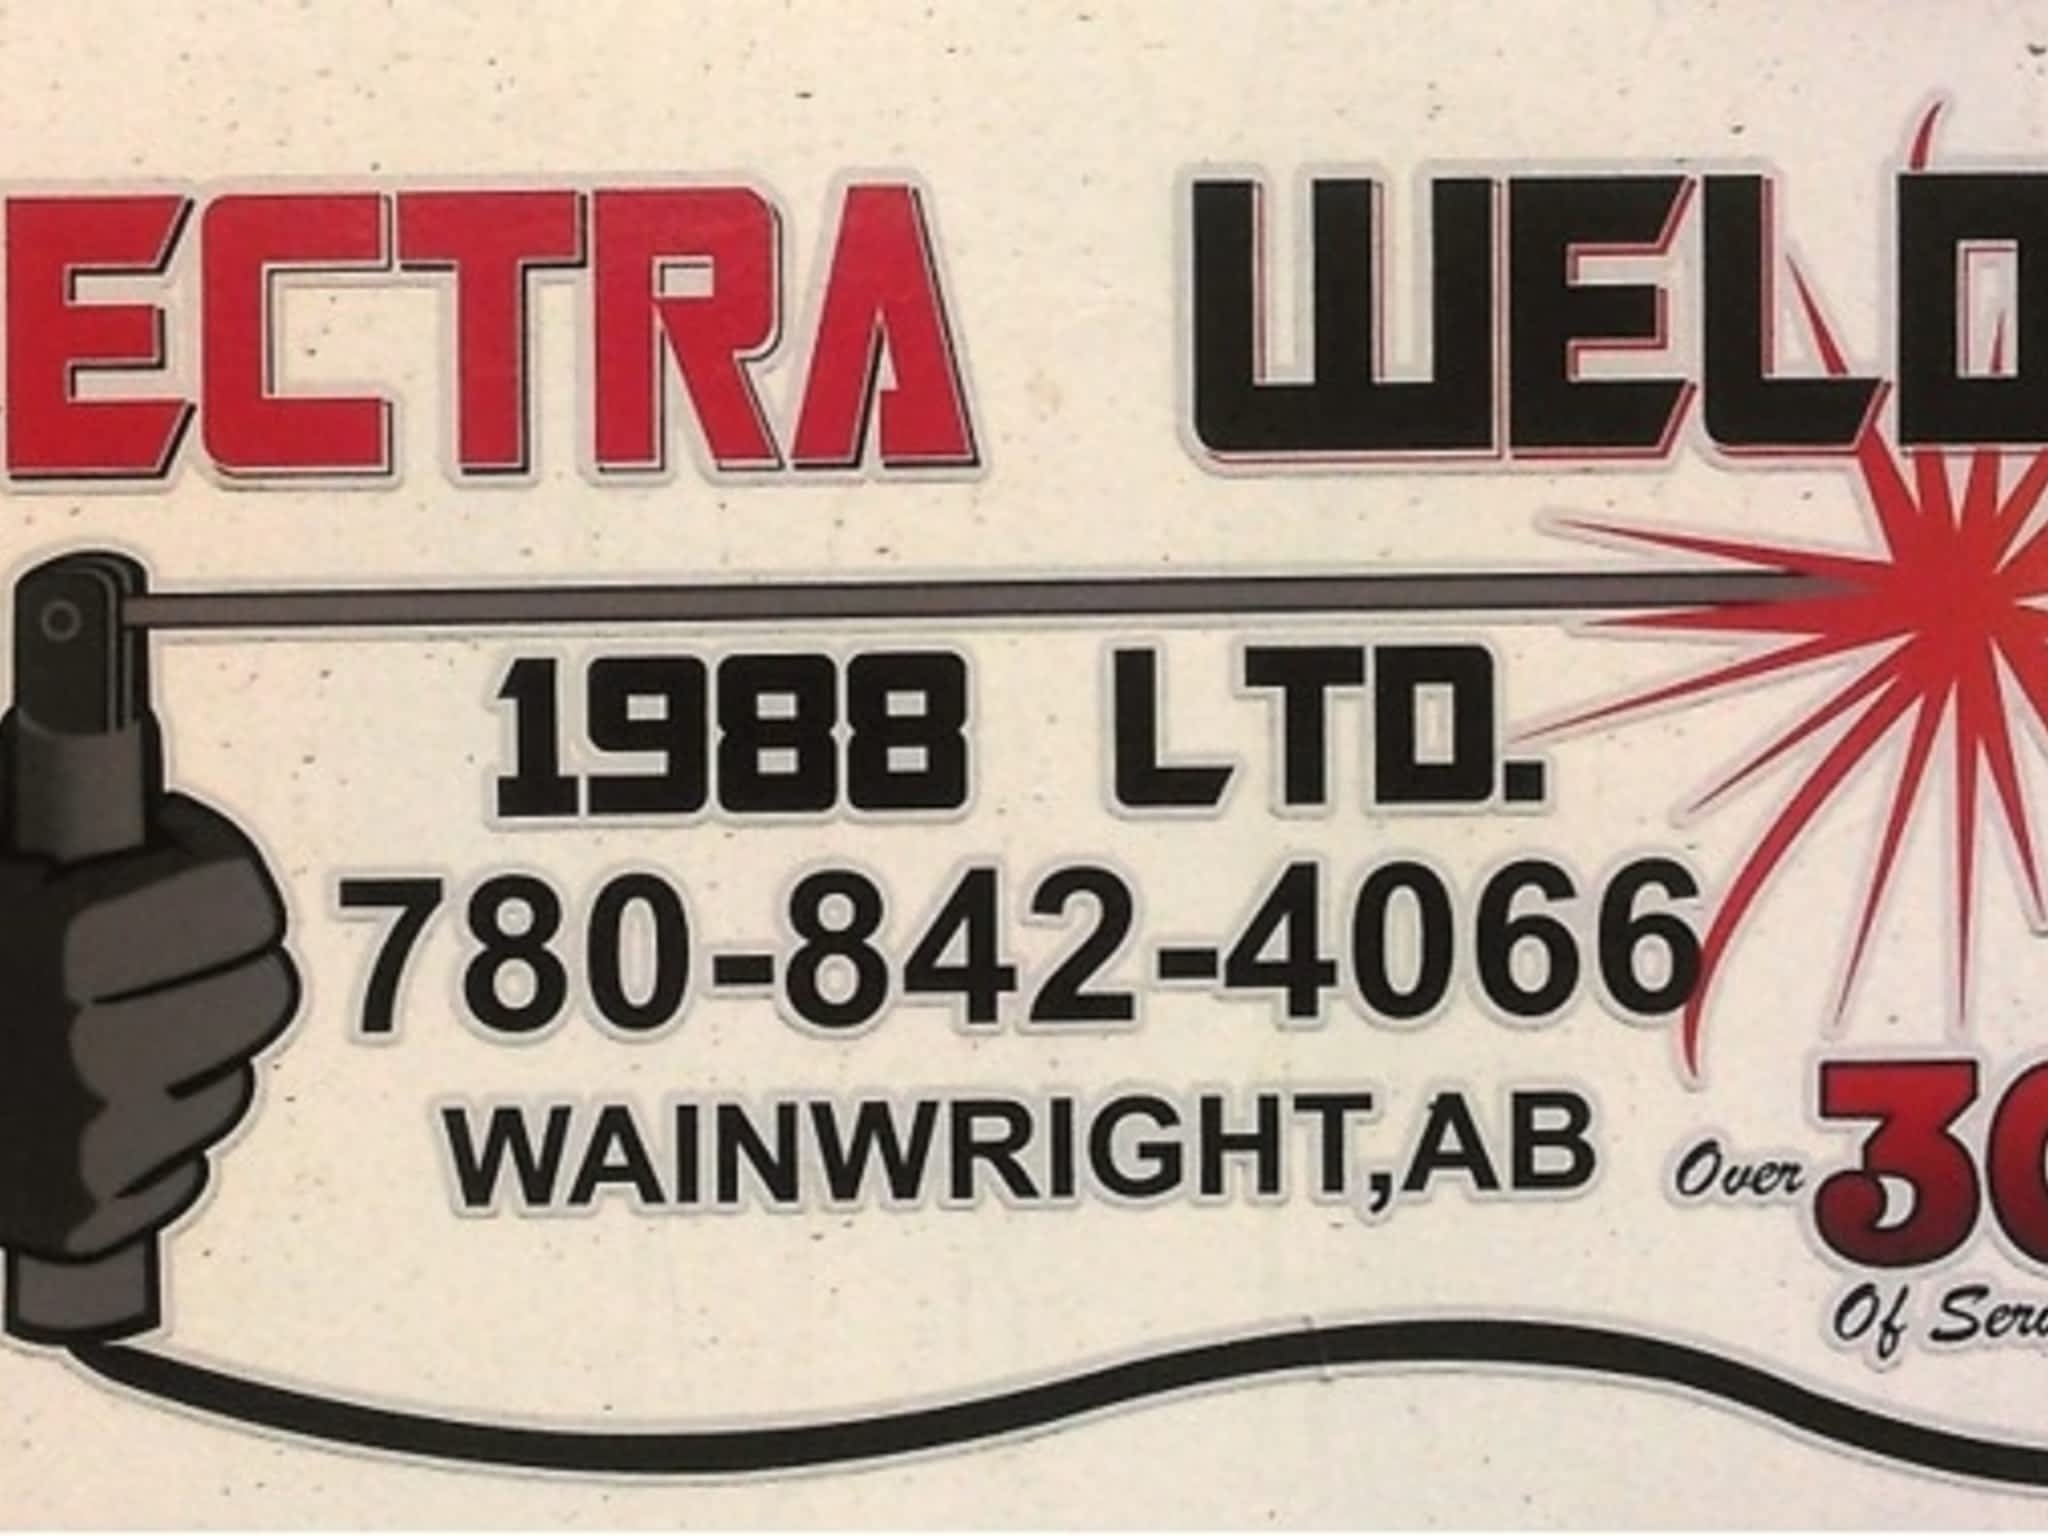 photo Electra Welding & Radiator Shop (1988) Ltd